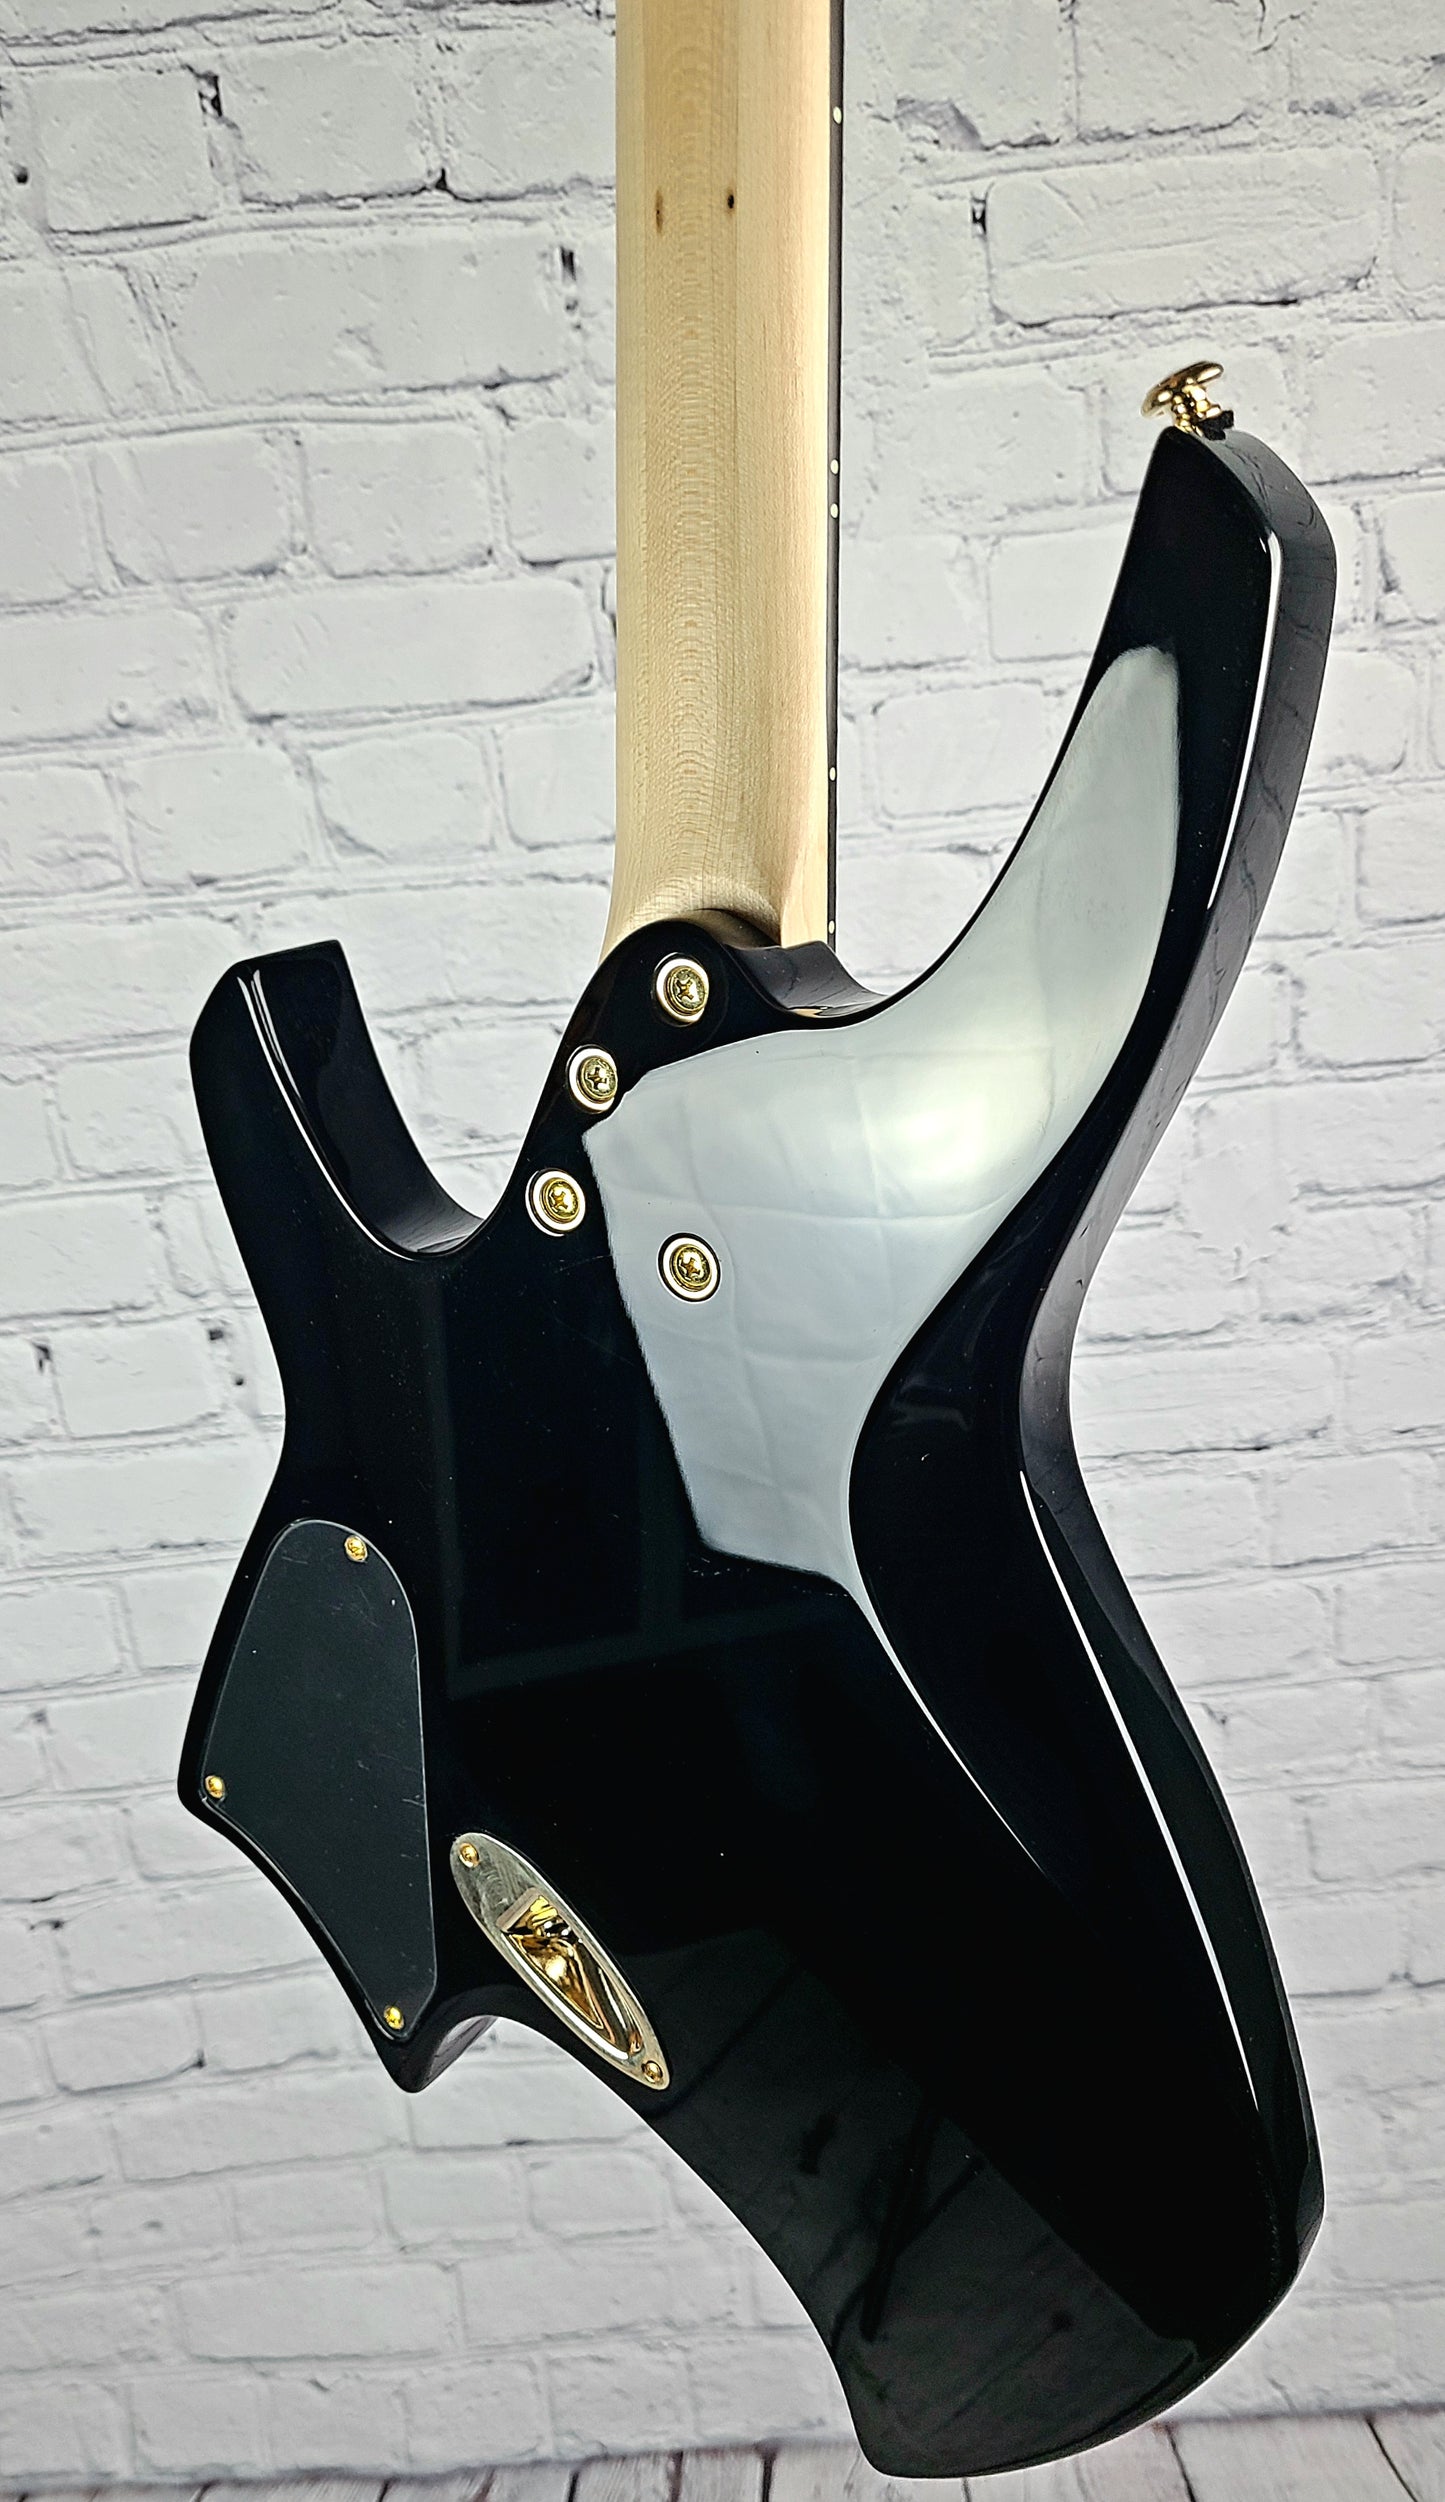 Ormsby Guitars Goliath GTR 6 String Tuxedo Black Headless Electric Guitar RUN 14